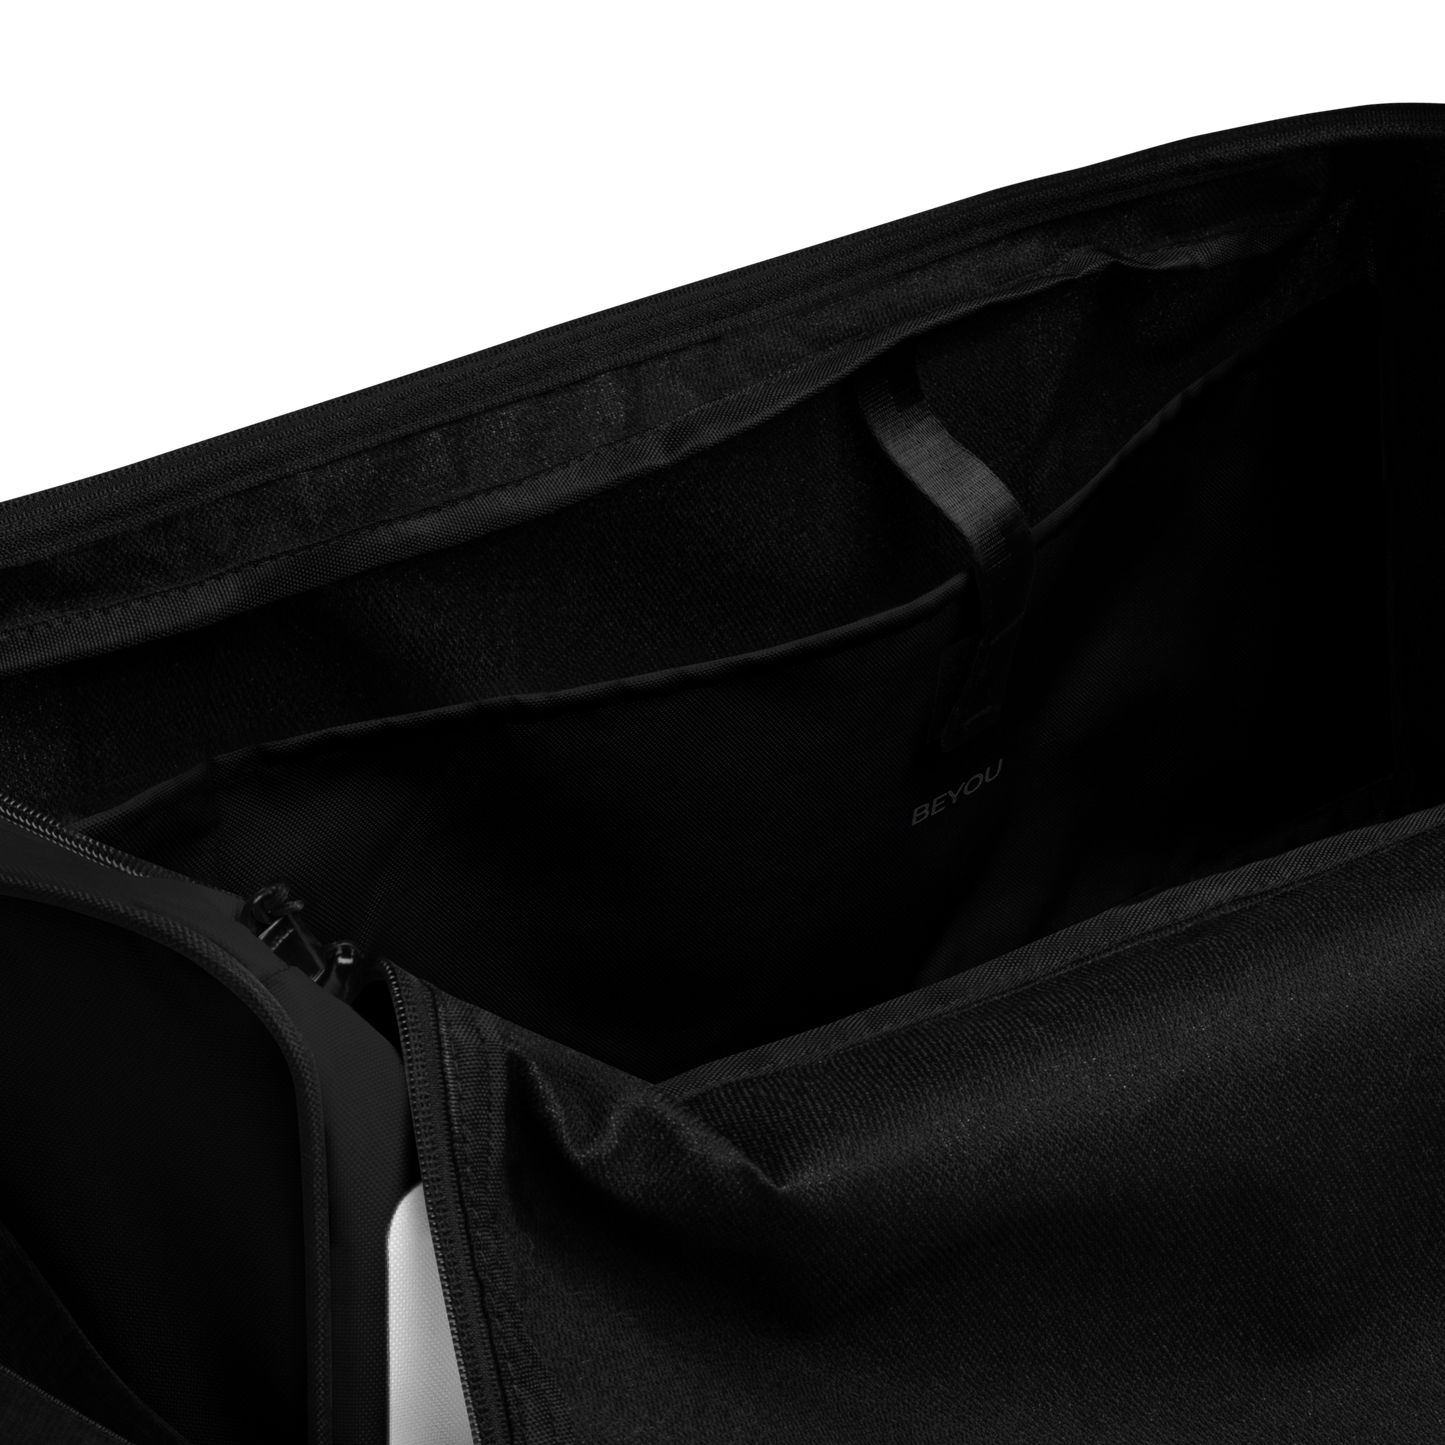 Black Duffle Large Travel Workout Bag